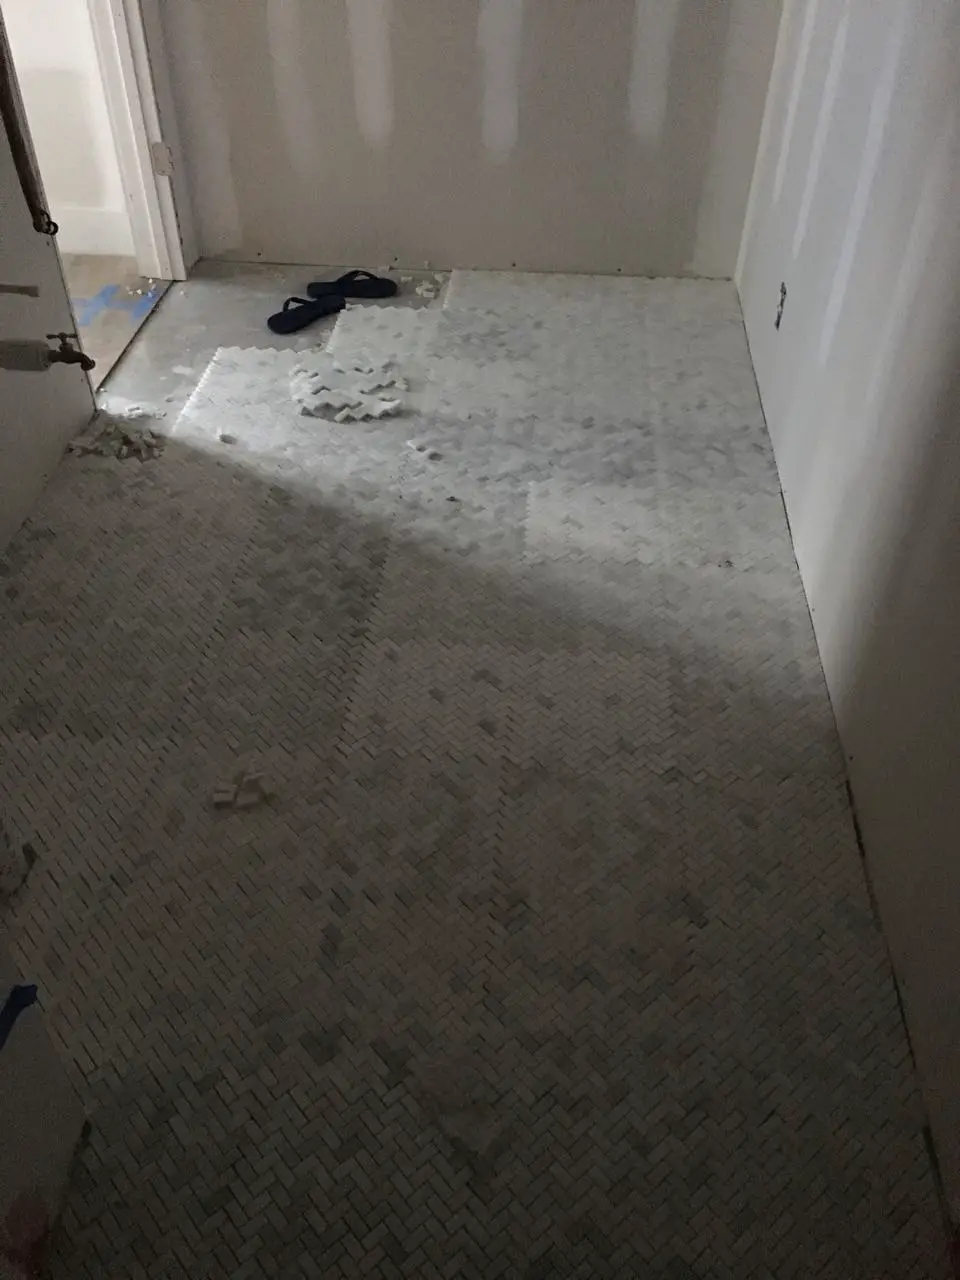 Marble herringbone tile bathroom floor disaster - That Homebird Life Blog